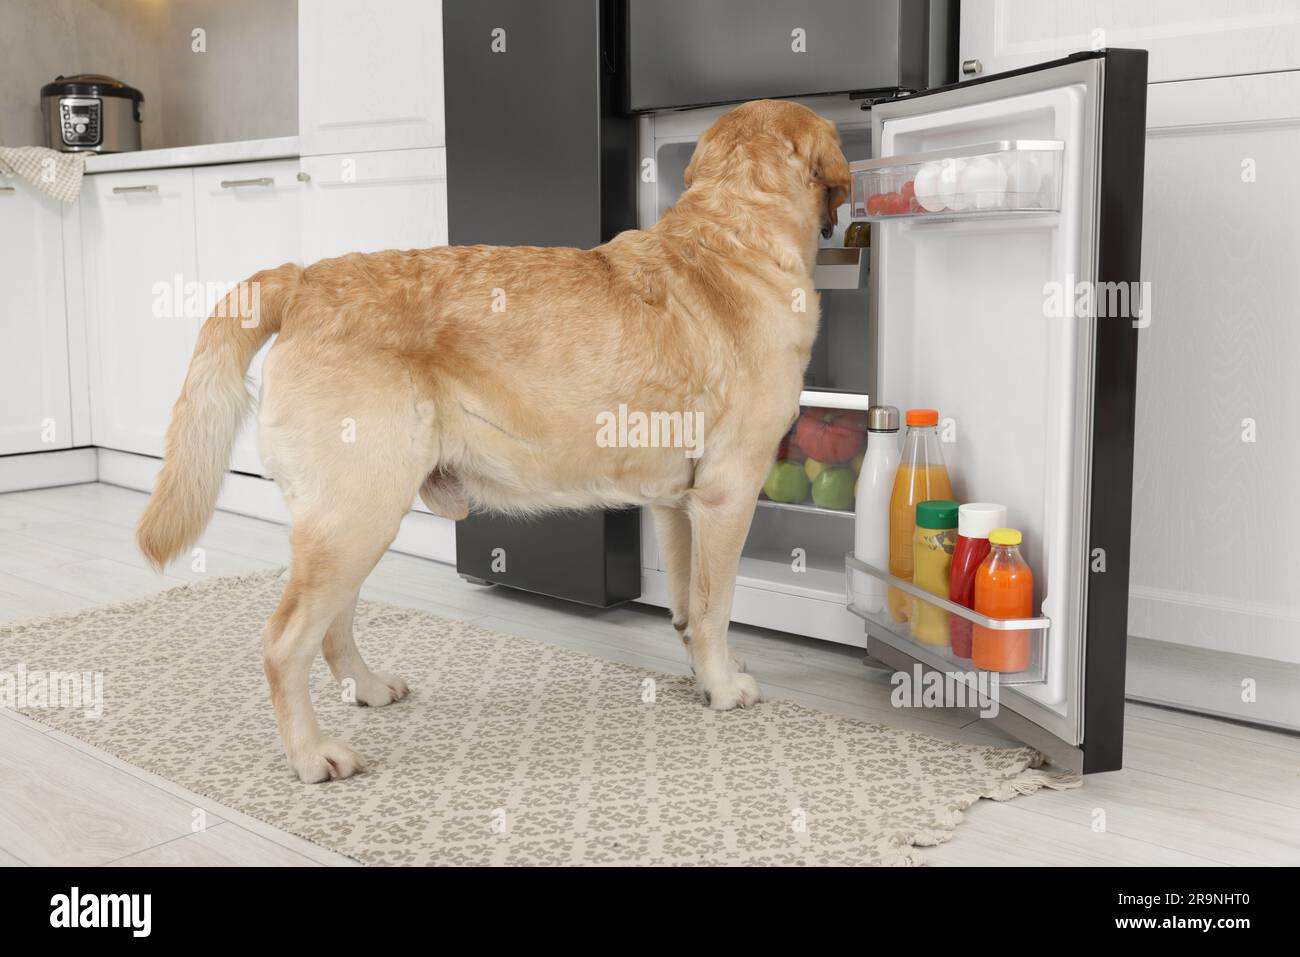 Cute Labrador Retriever seeking for food in kitchen refrigerator Stock Photo